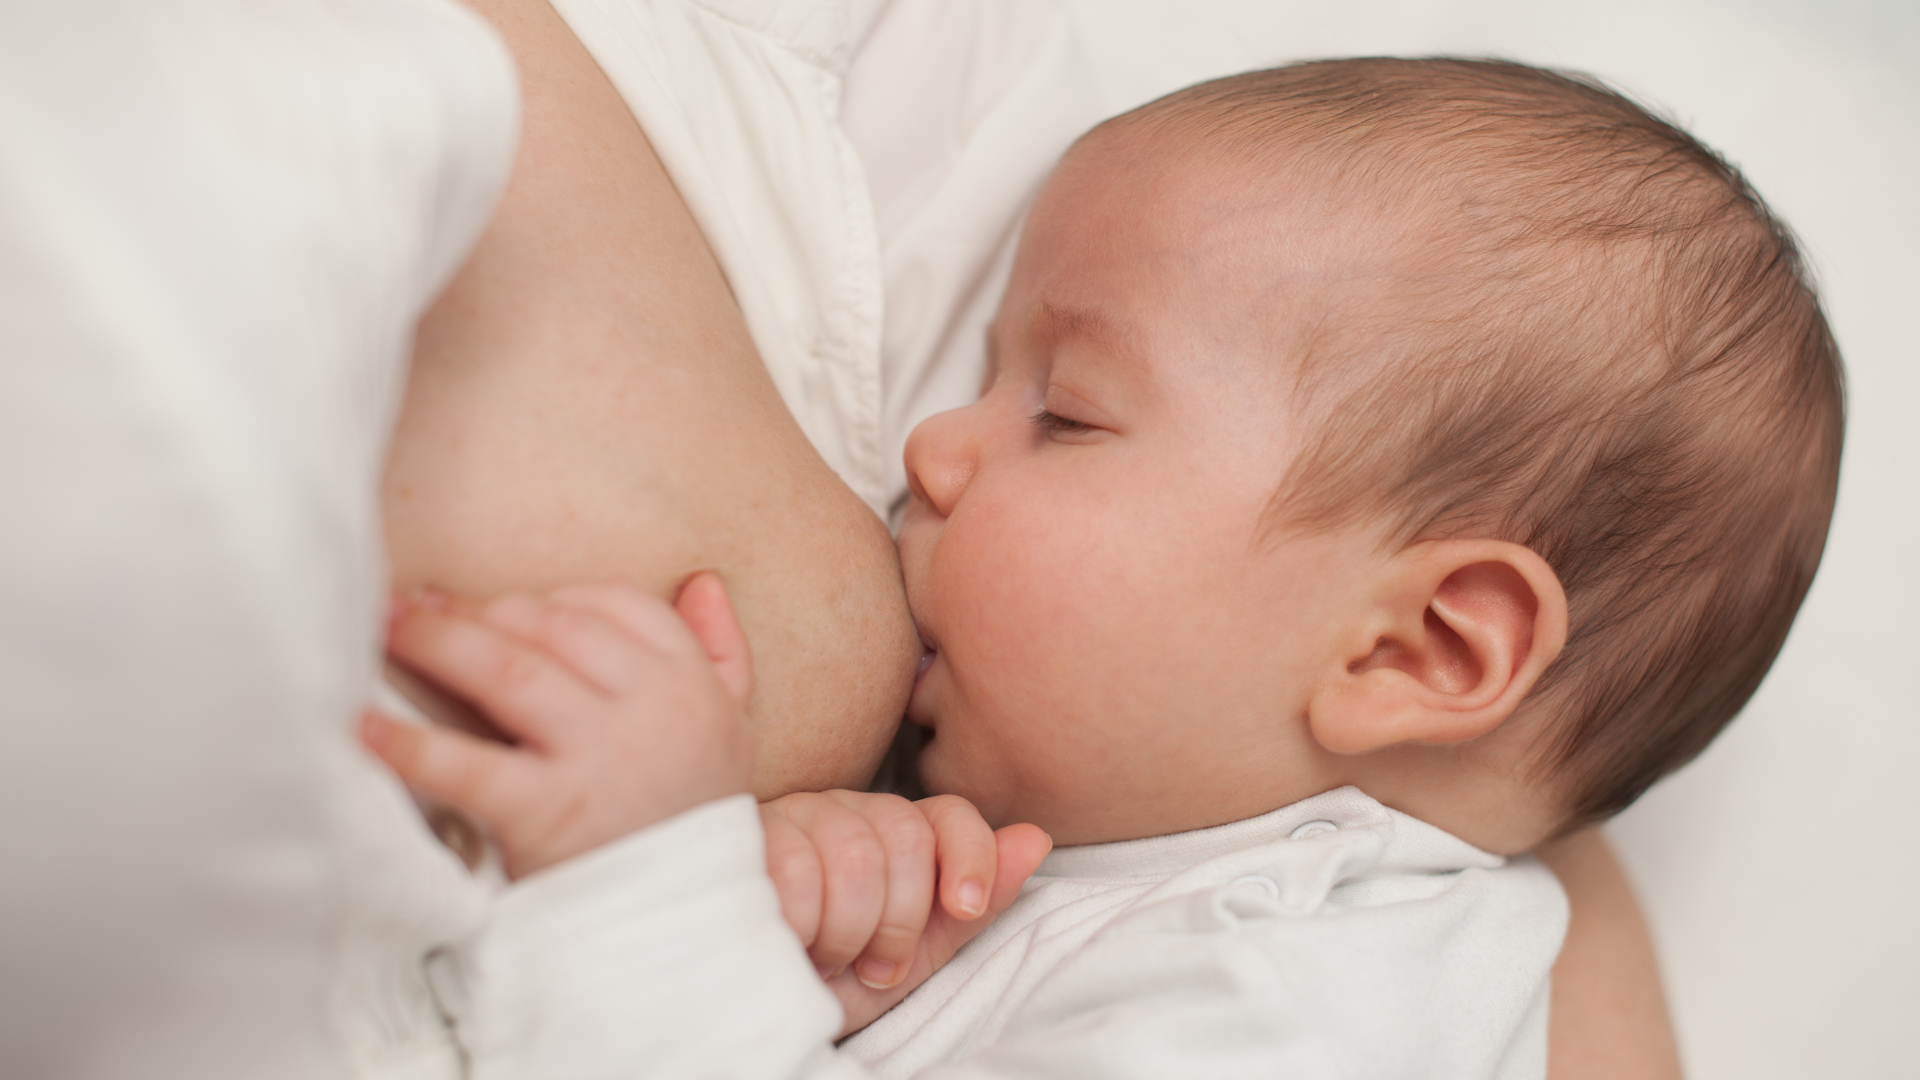 breastfeeding with small breasts, small boobs breastfeeding